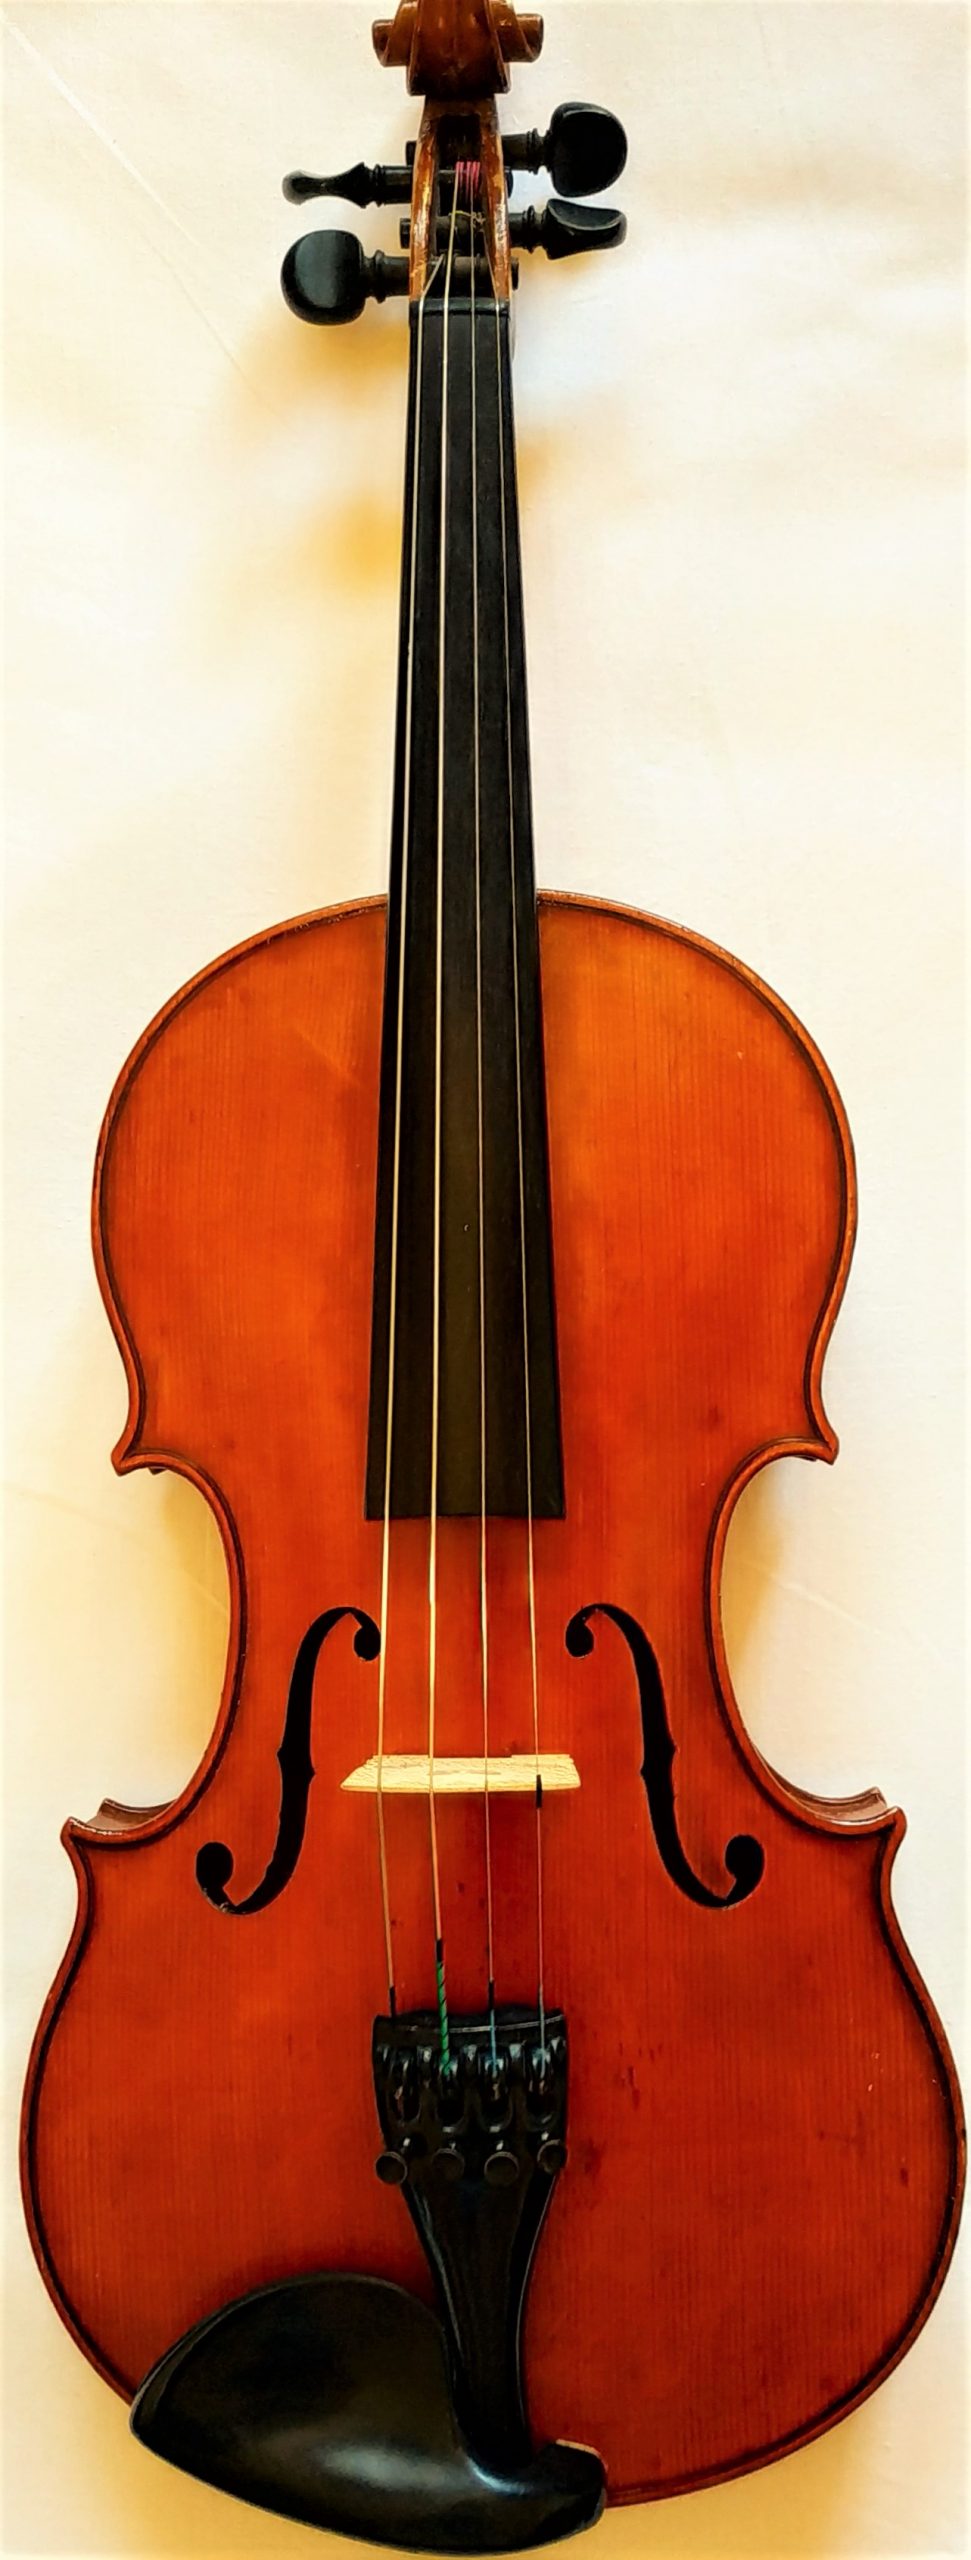 Французская скрипка 19го века